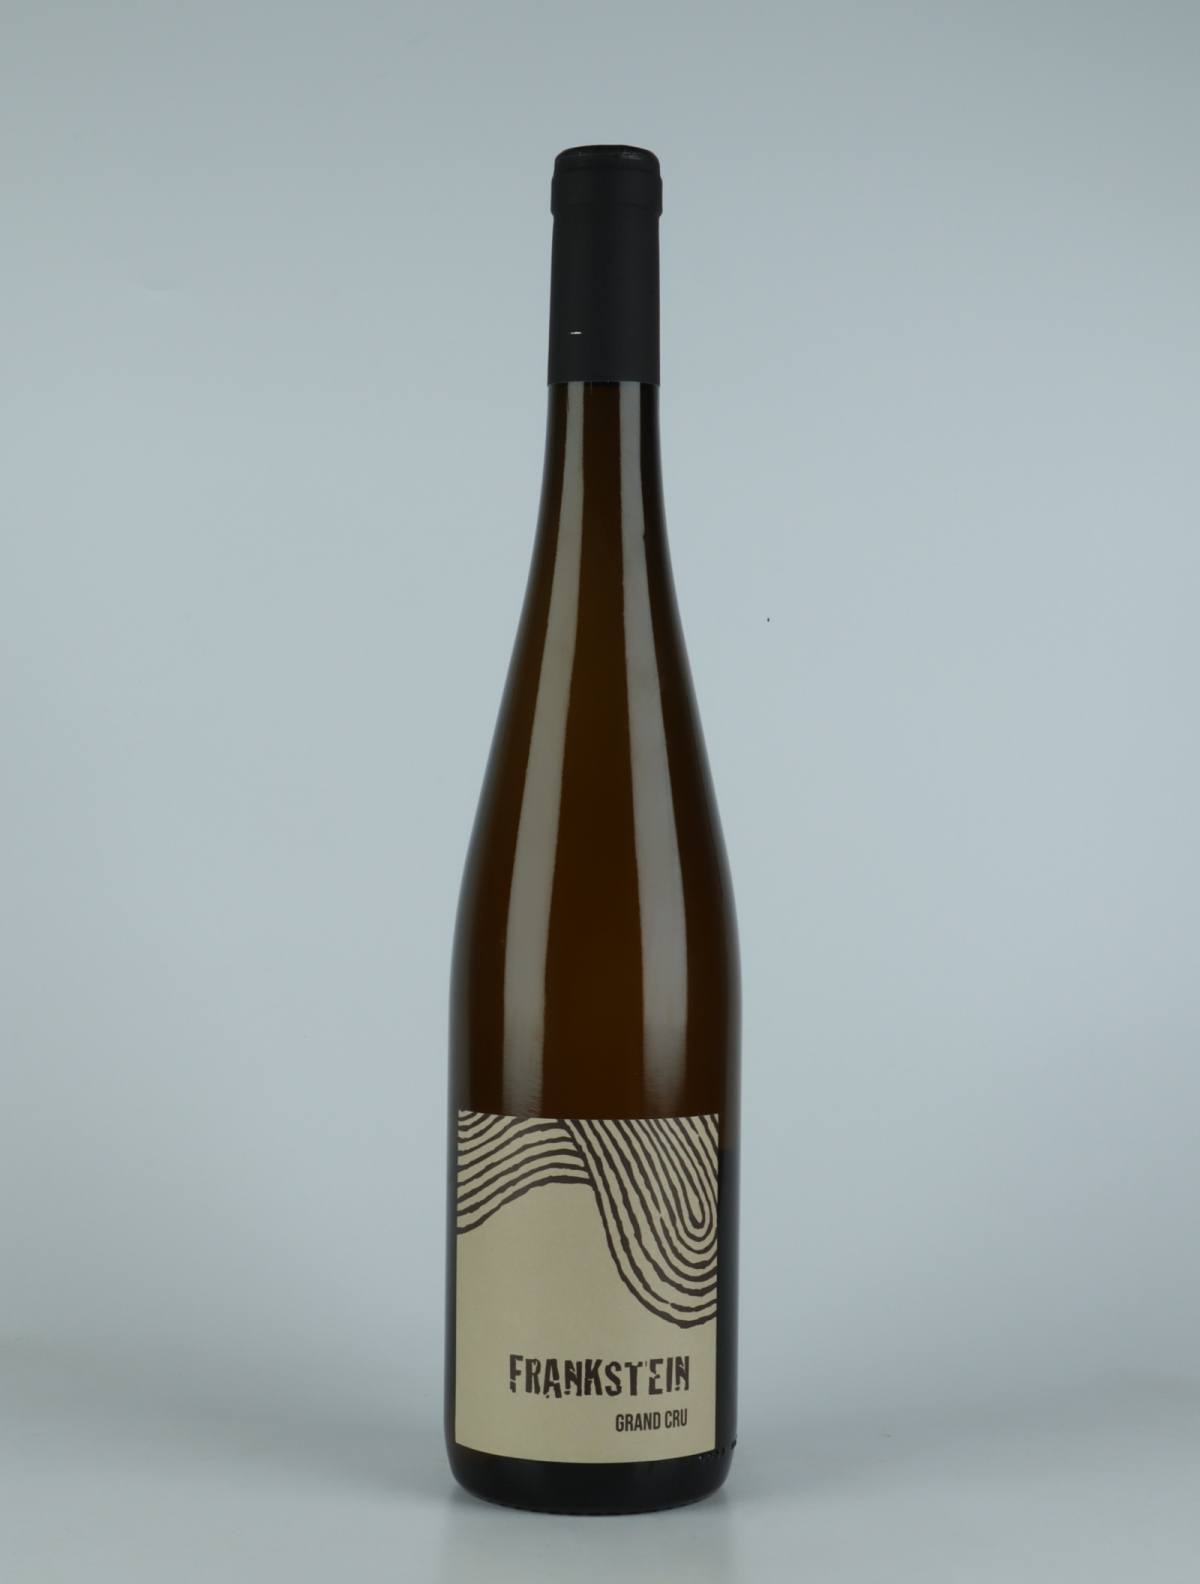 A bottle 2020 Frankstein White wine from Ruhlmann Dirringer, Alsace in France